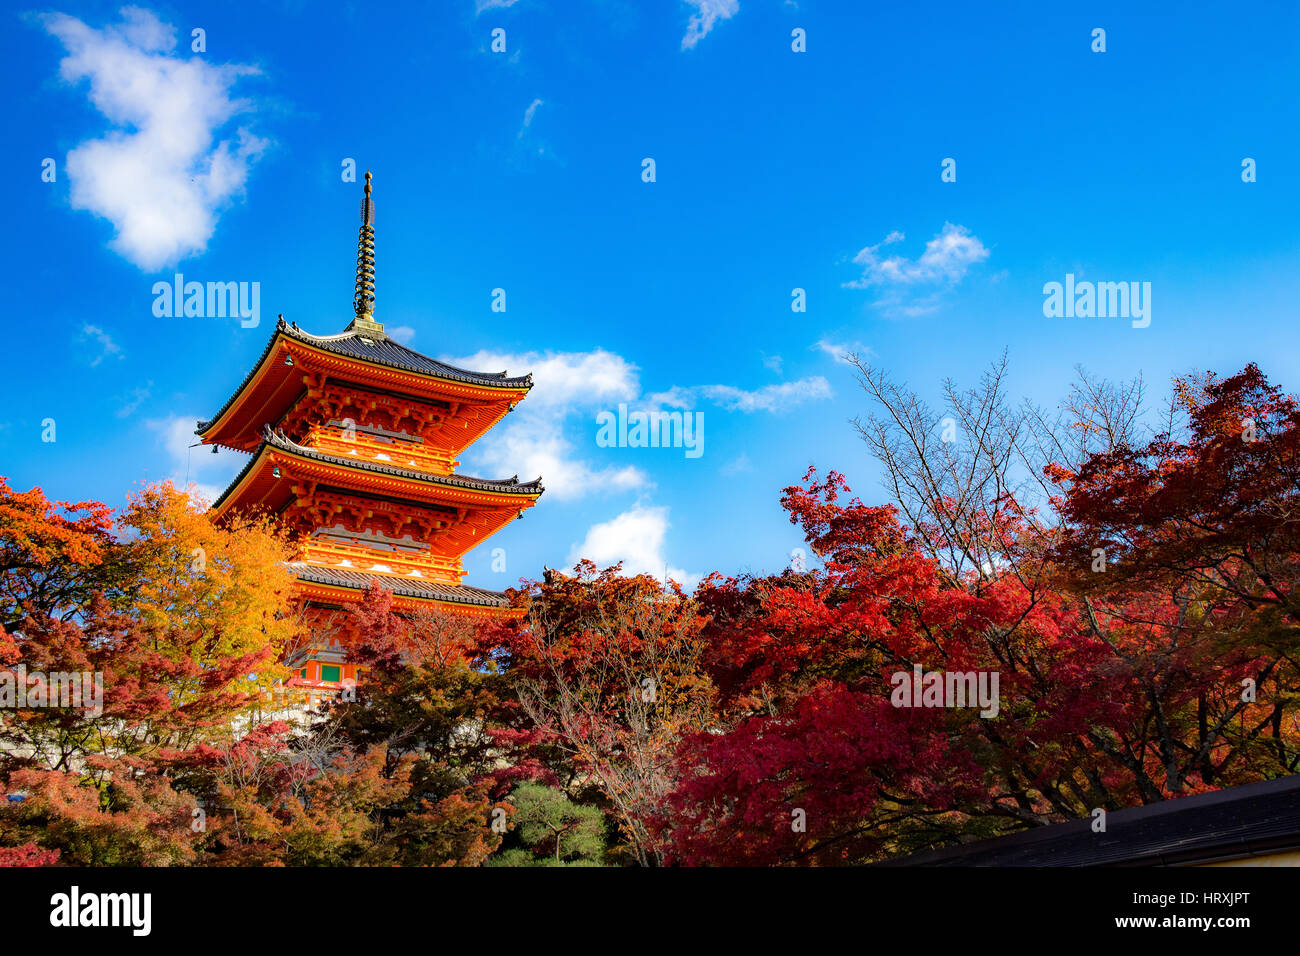 Attraction in Japan. The Kiyomizu temple, Kyoto, Japan. Stock Photo